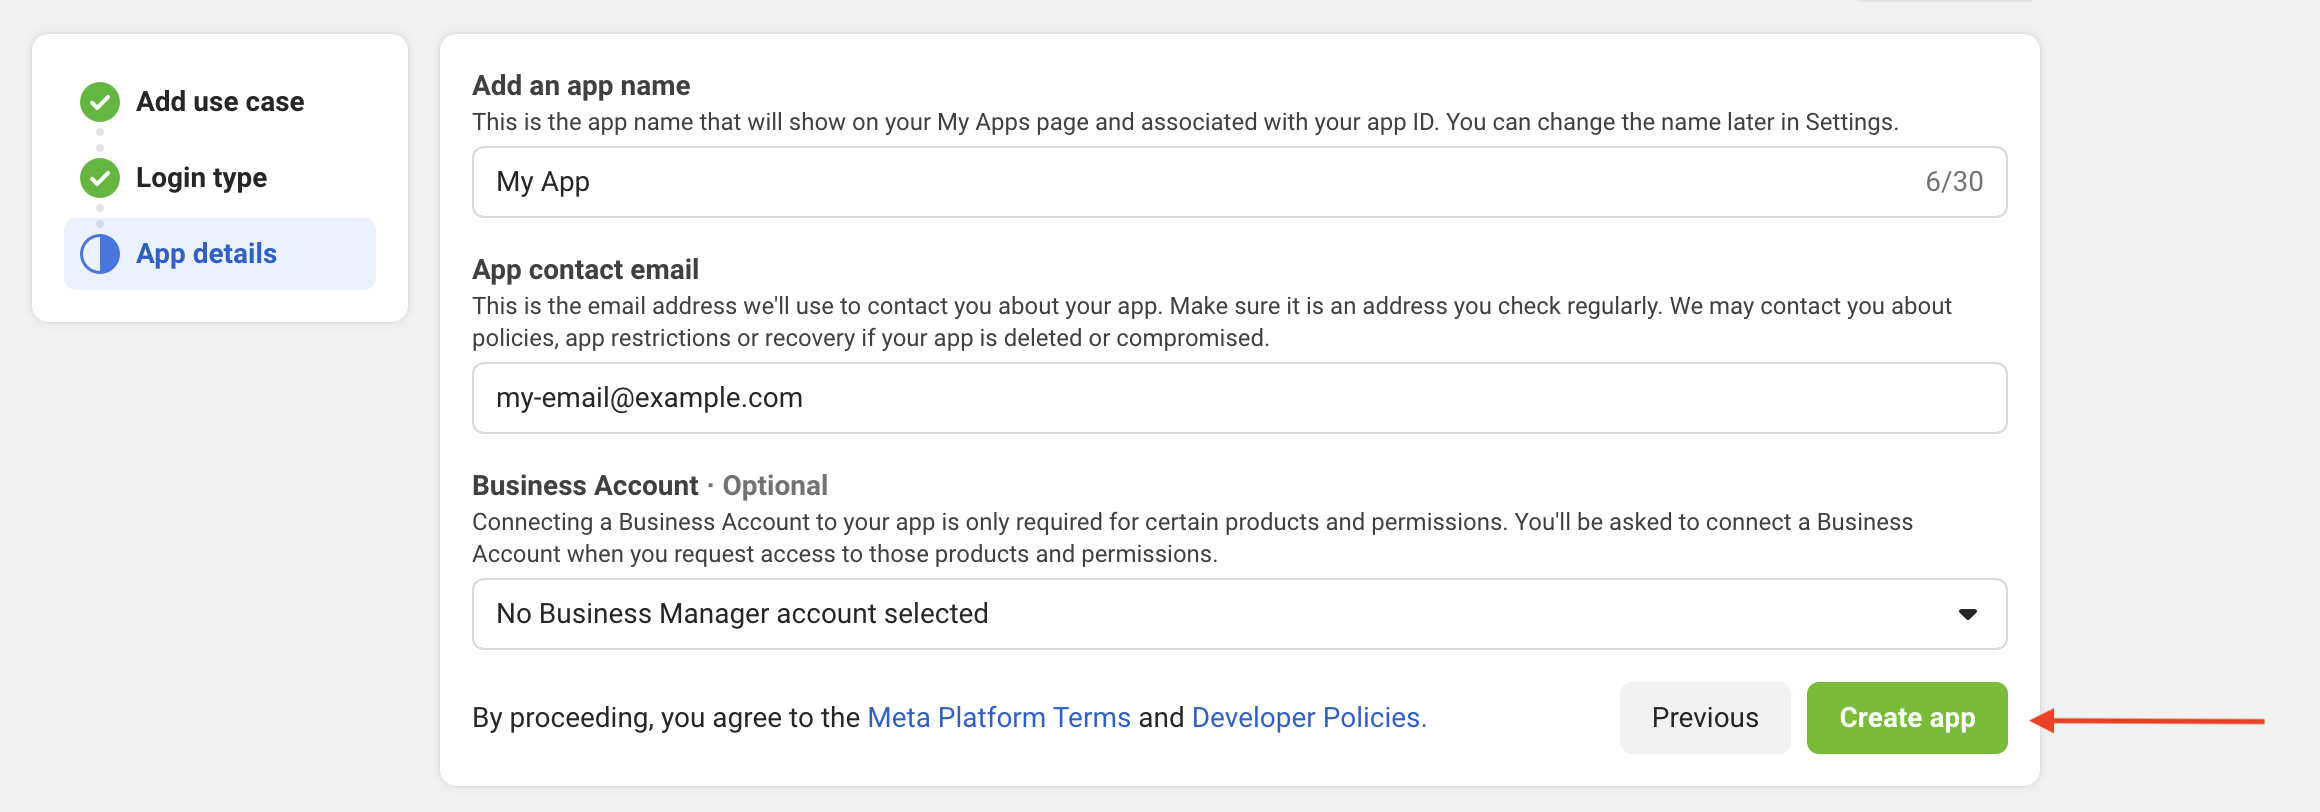 Screenshot showing the facebook create app flow app details page